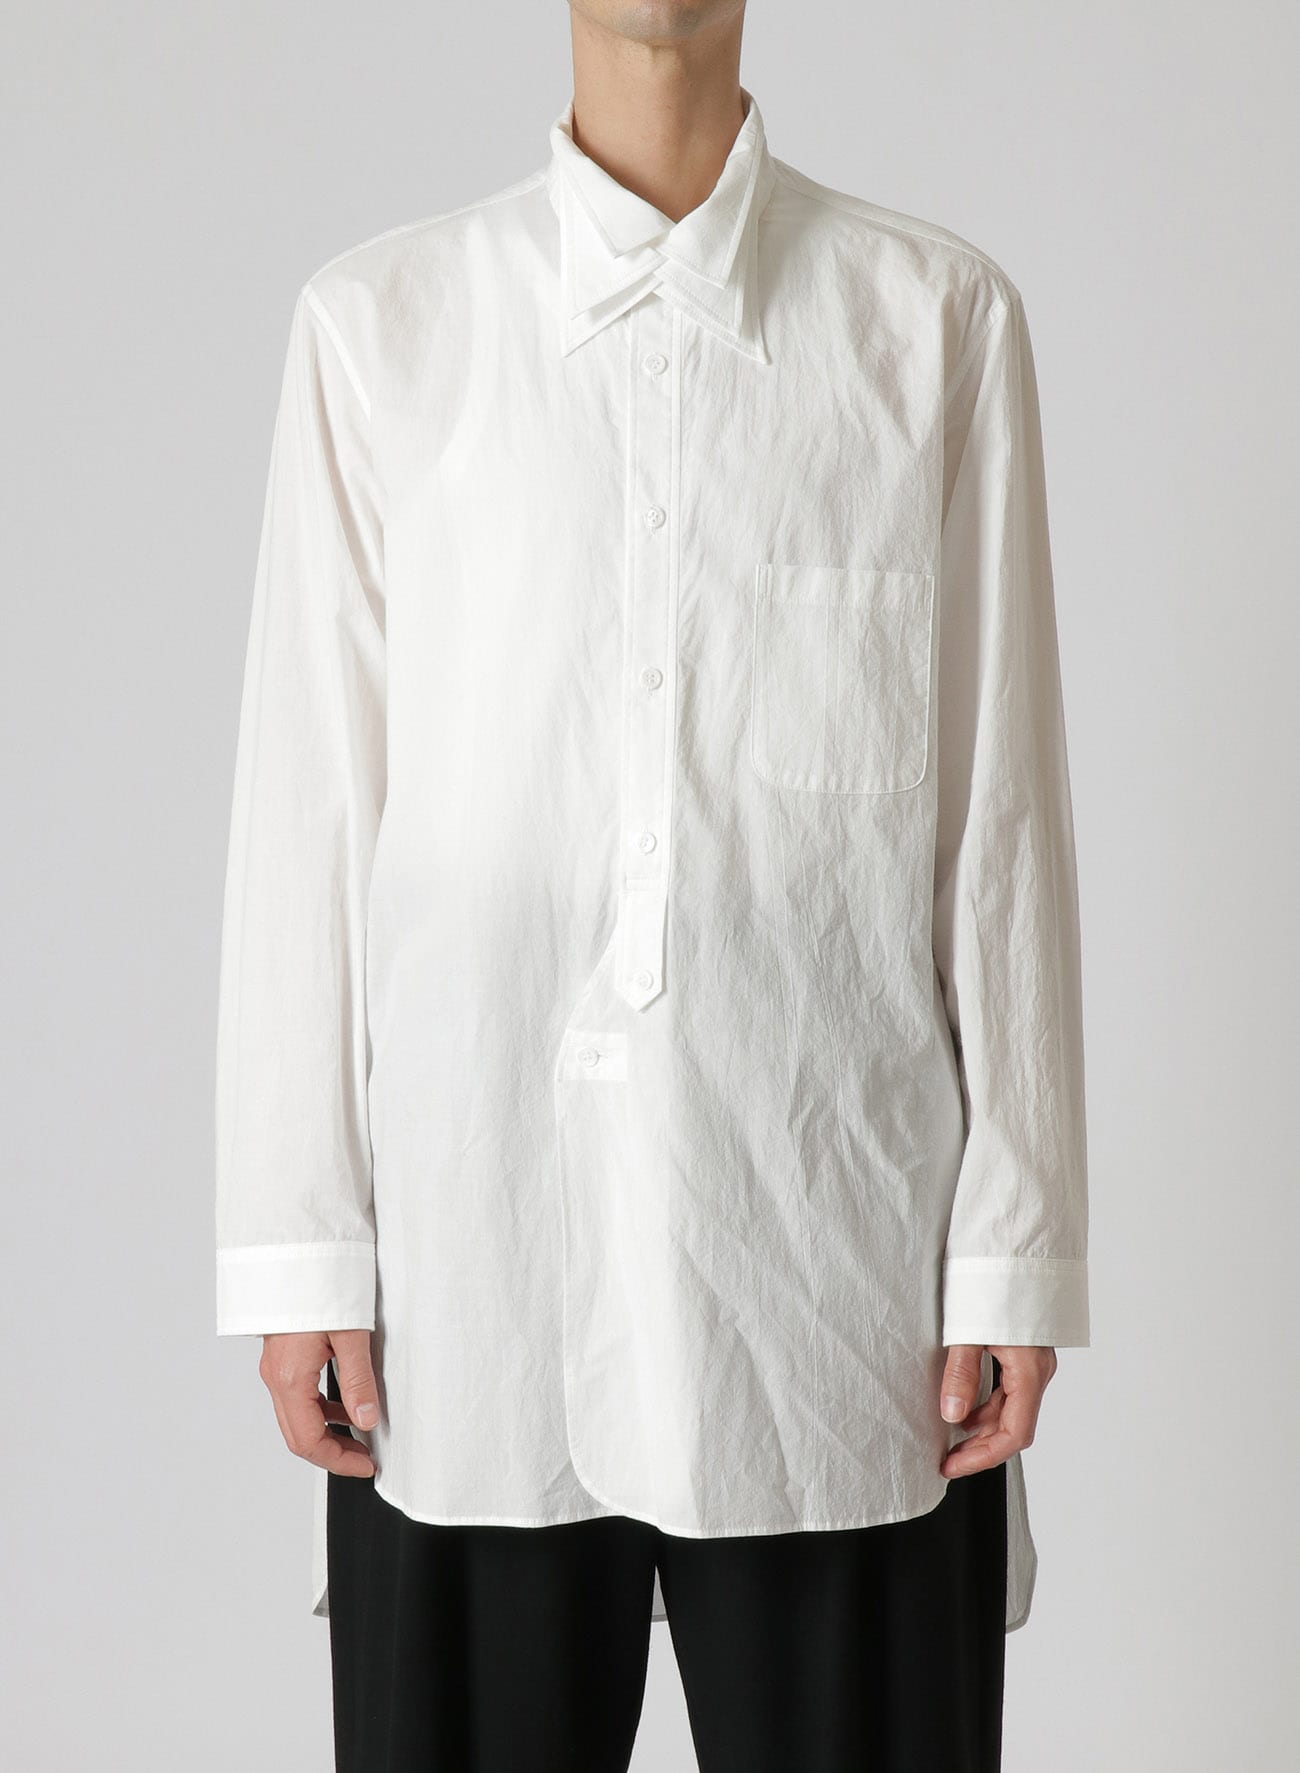 60/- LAWN R-FRONT R TRIPLE COLLAR B power of the WHITE shirt | THE YOHJI YAMAMOTO